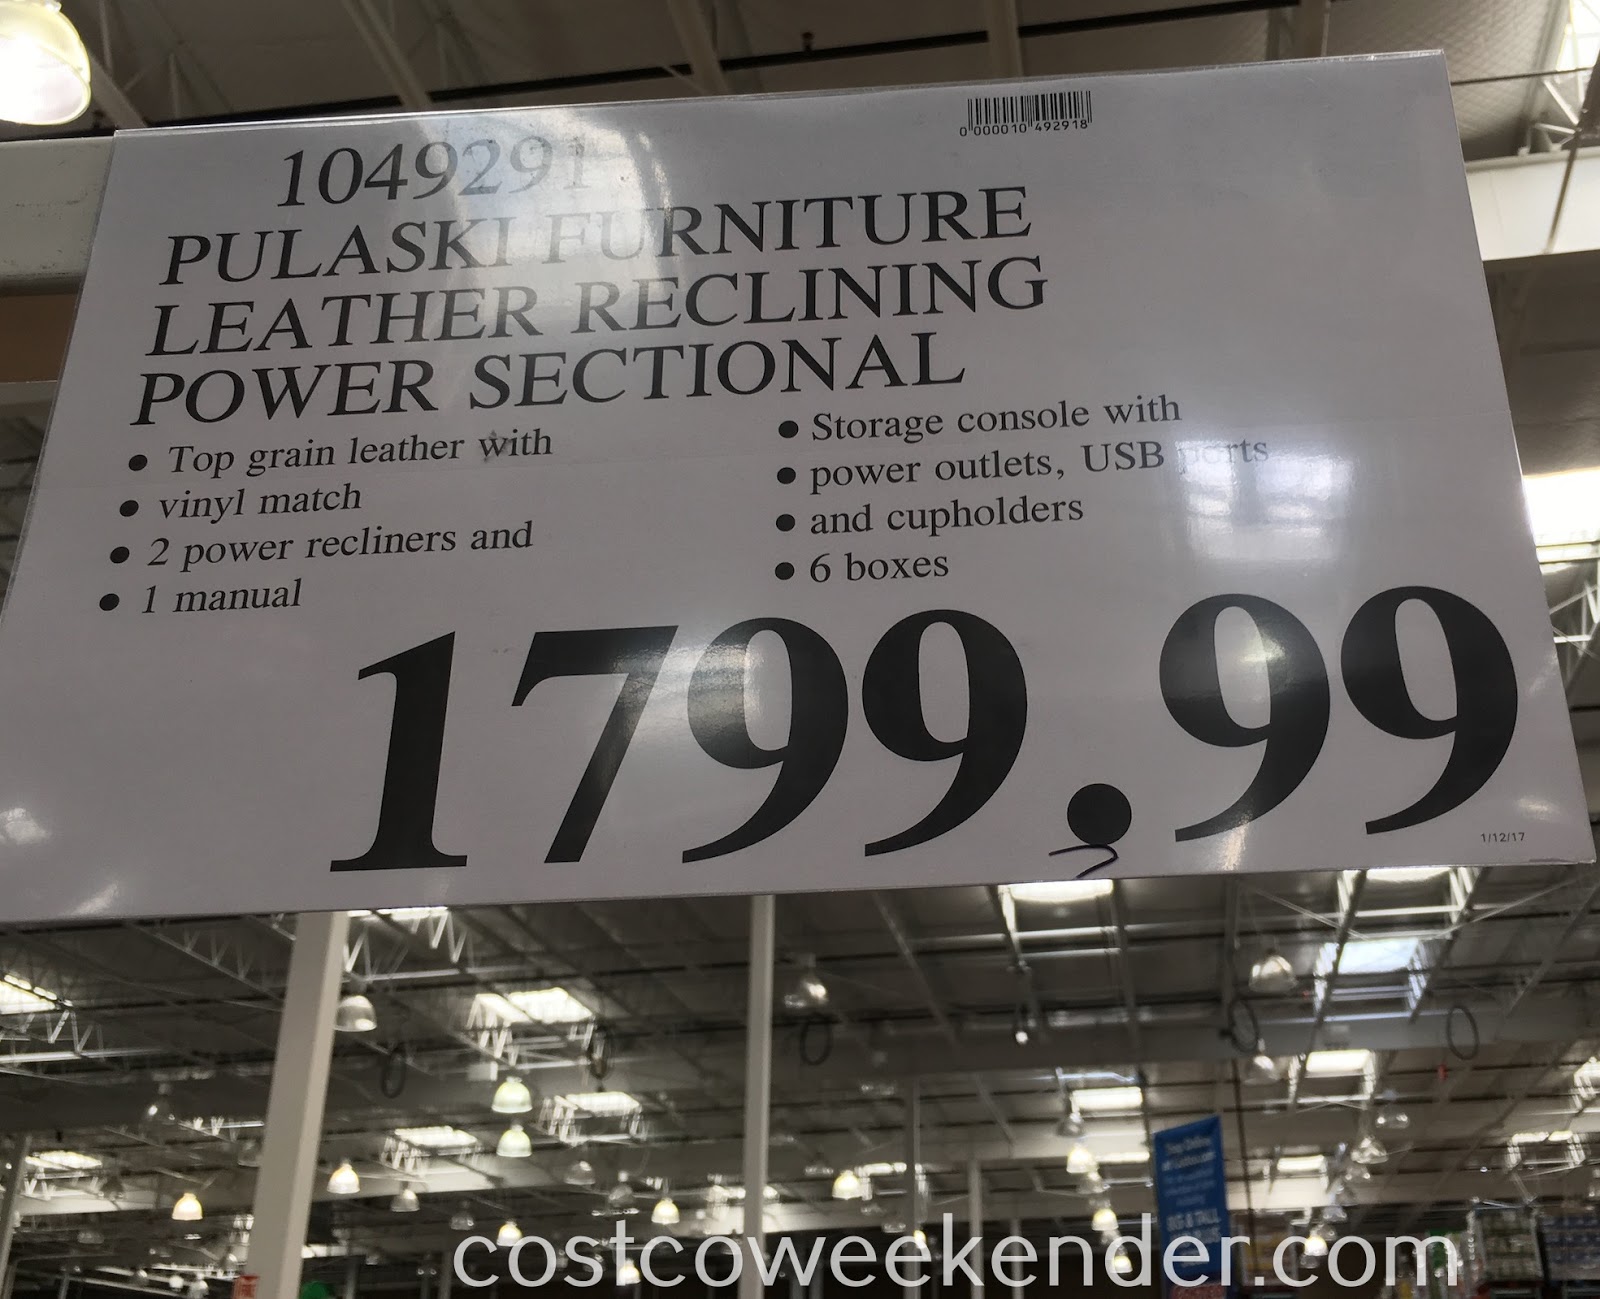 Pulaski Furniture Leather Reclining Power Sectional